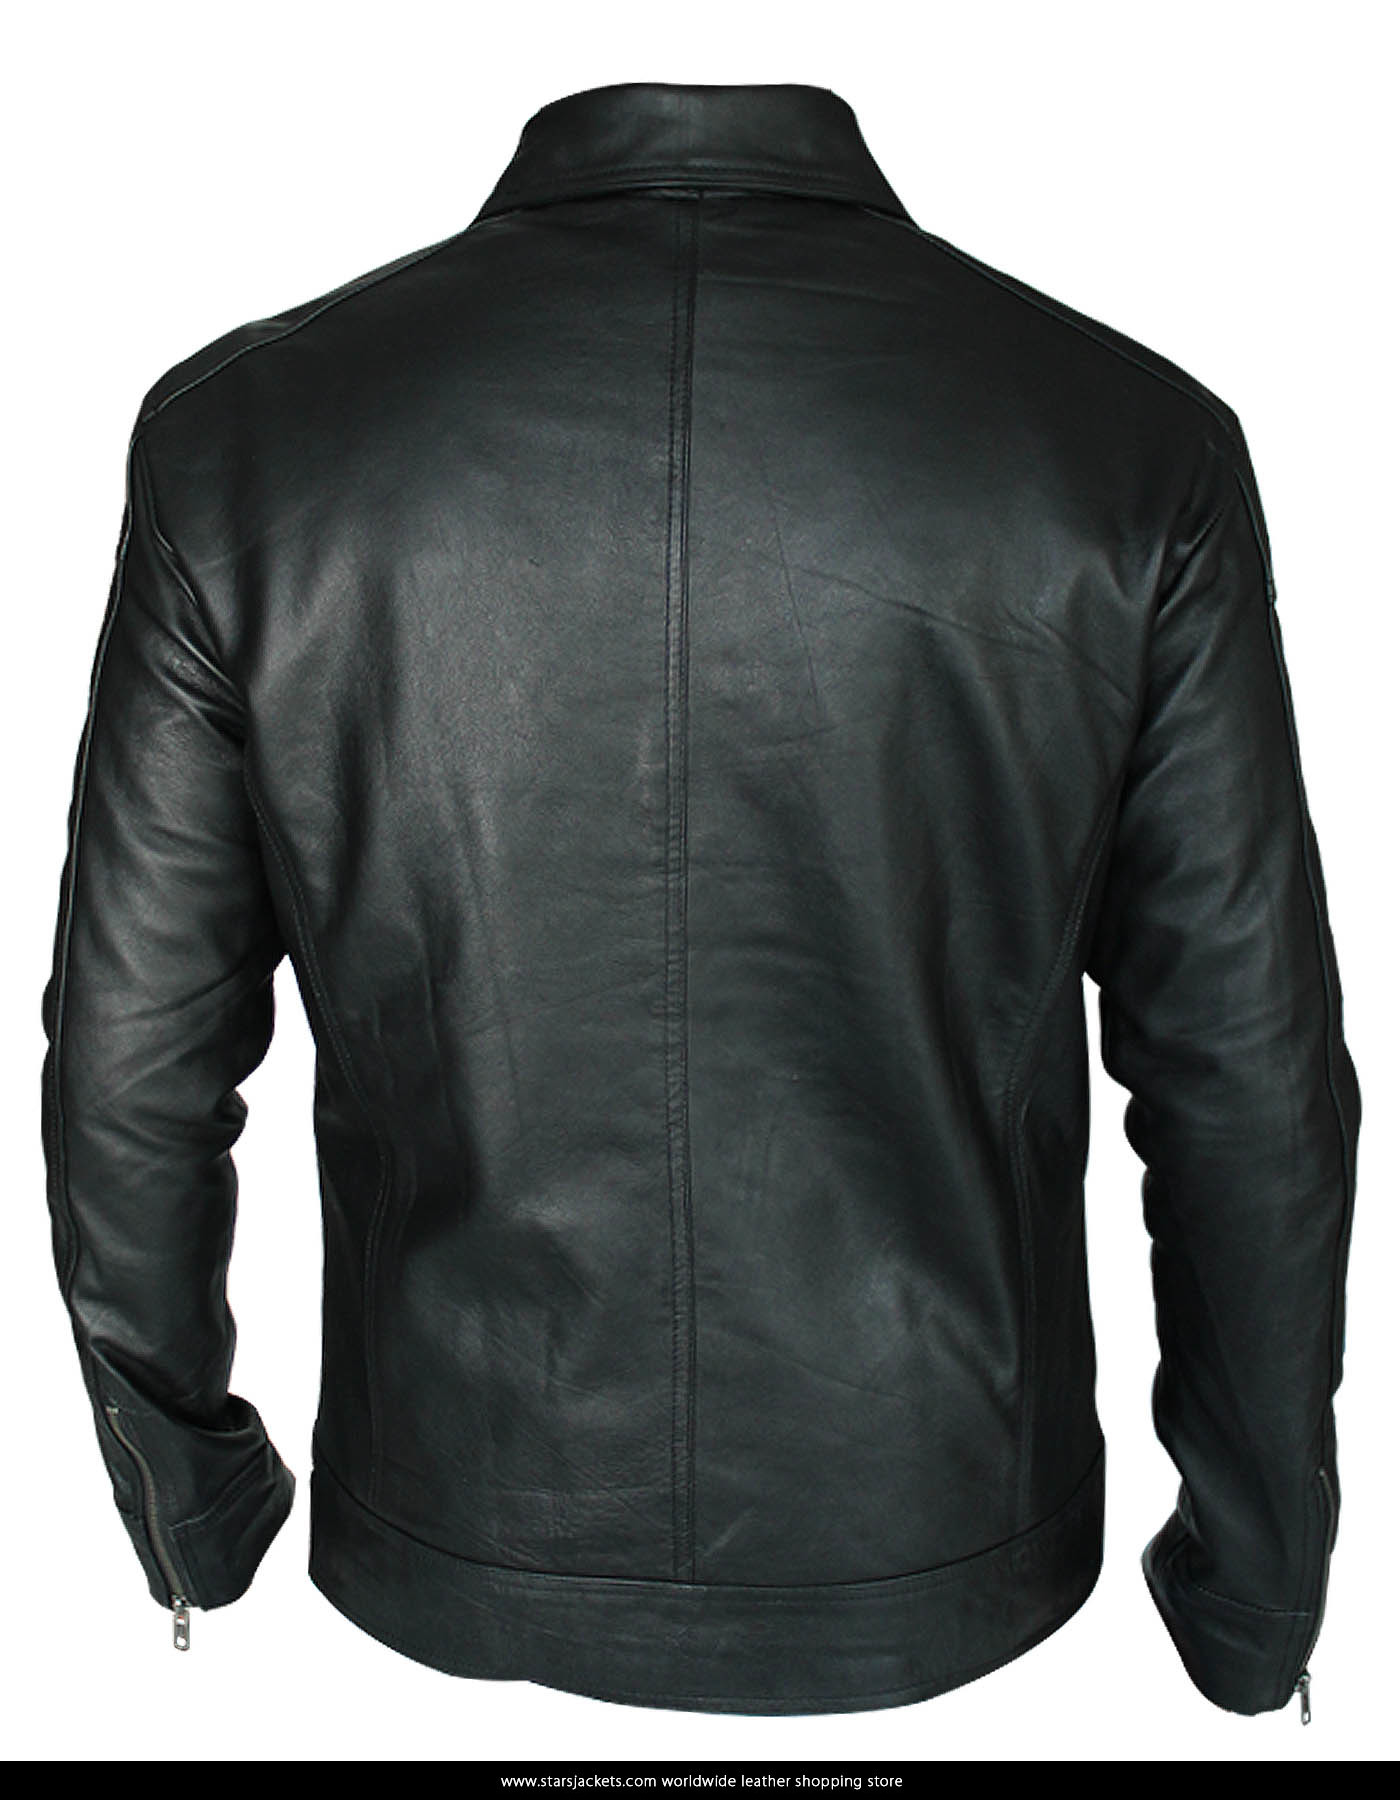 Need For Speed Aaron Paul Black Leather Jacket - Stars Jackets